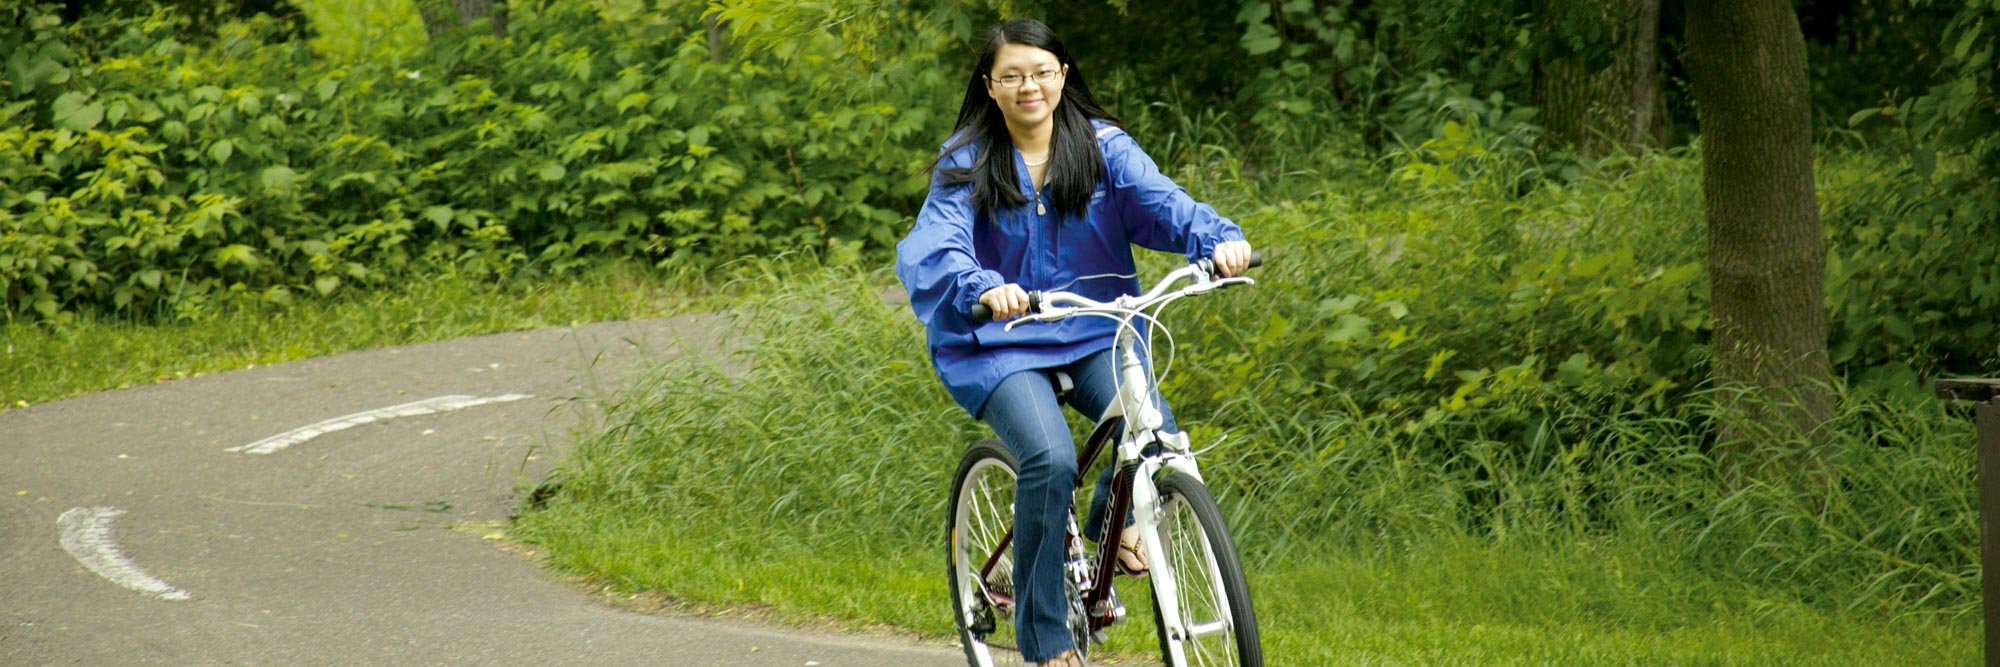 student on bike trail